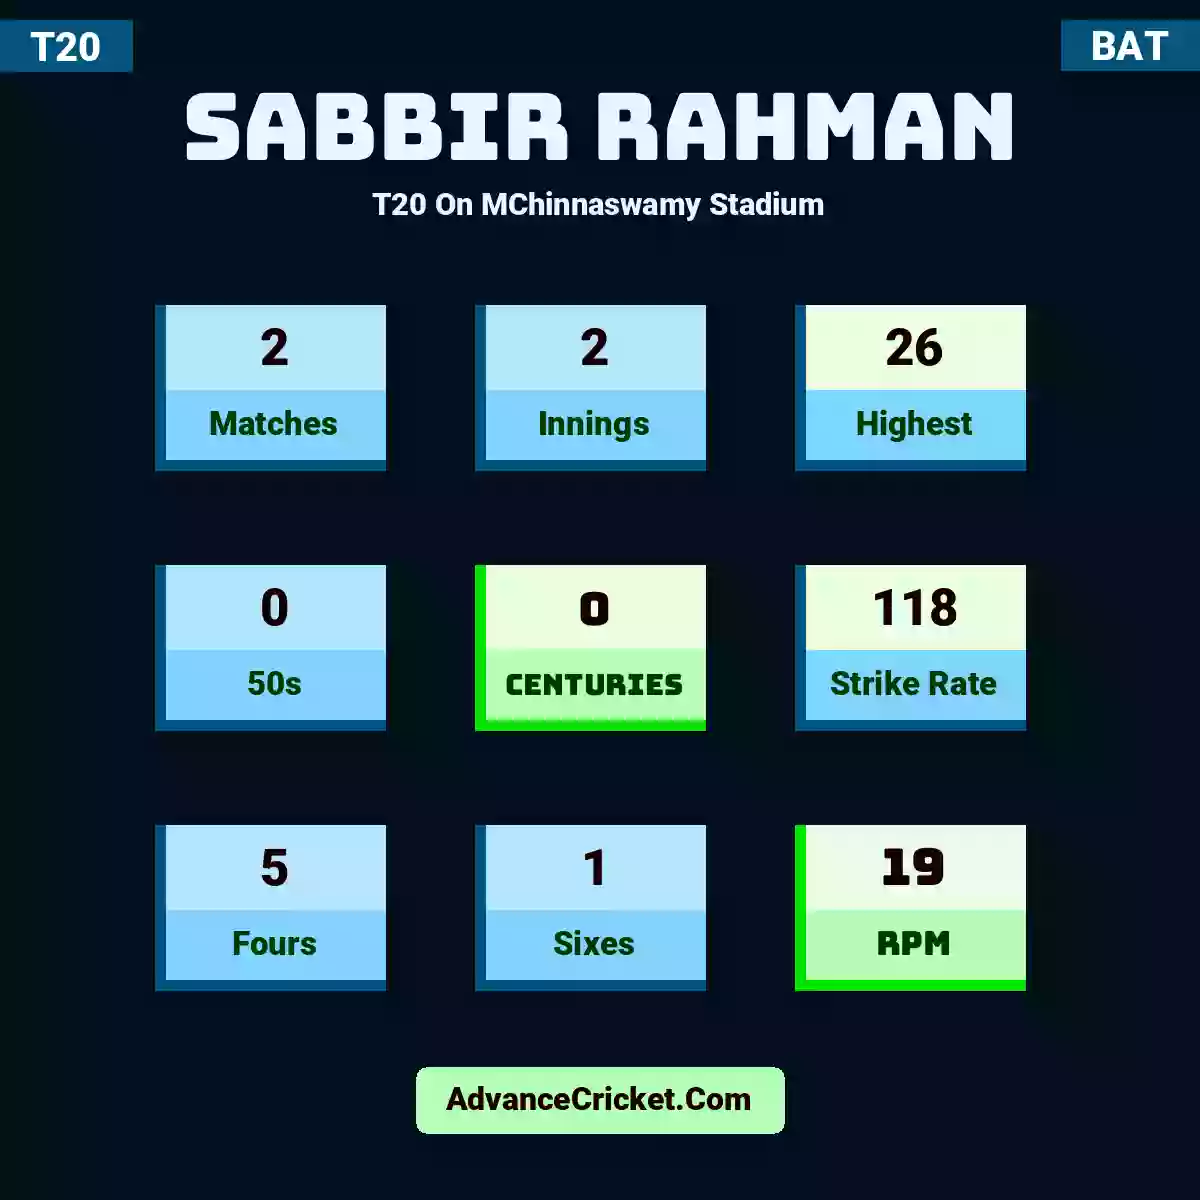 Sabbir Rahman T20  On MChinnaswamy Stadium, Sabbir Rahman played 2 matches, scored 26 runs as highest, 0 half-centuries, and 0 centuries, with a strike rate of 118. S.Rahman hit 5 fours and 1 sixes, with an RPM of 19.